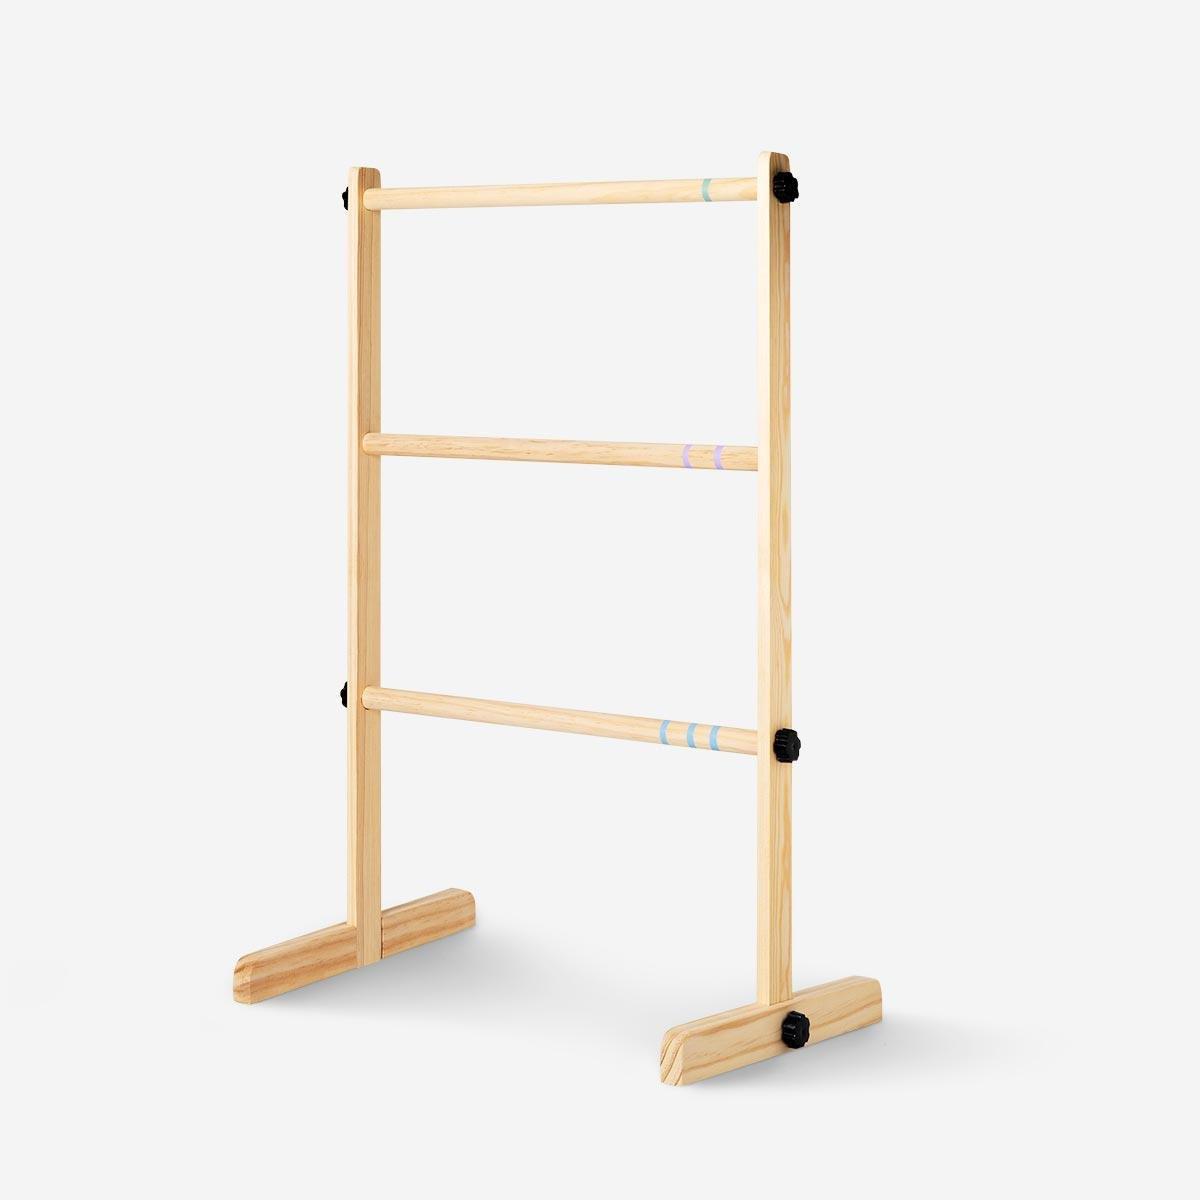 Wooden ladder game